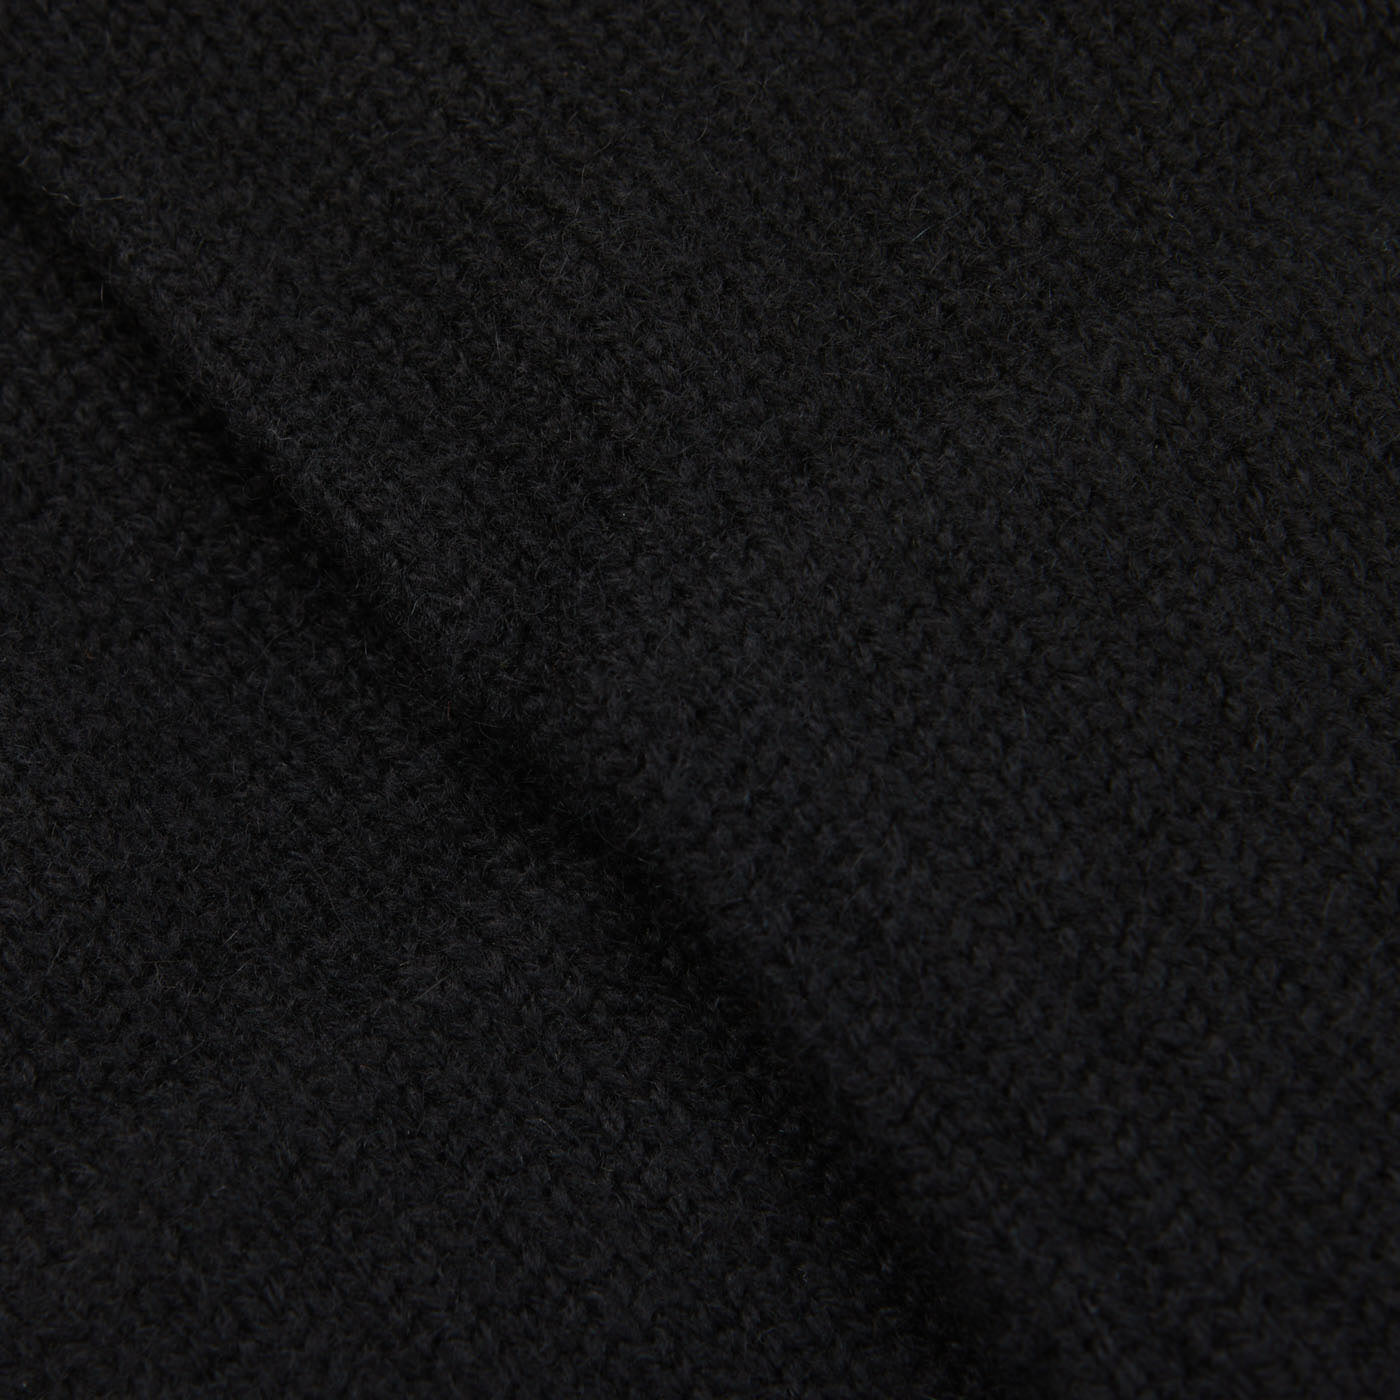 A close up image of a black William Lockie cashmere scarf.